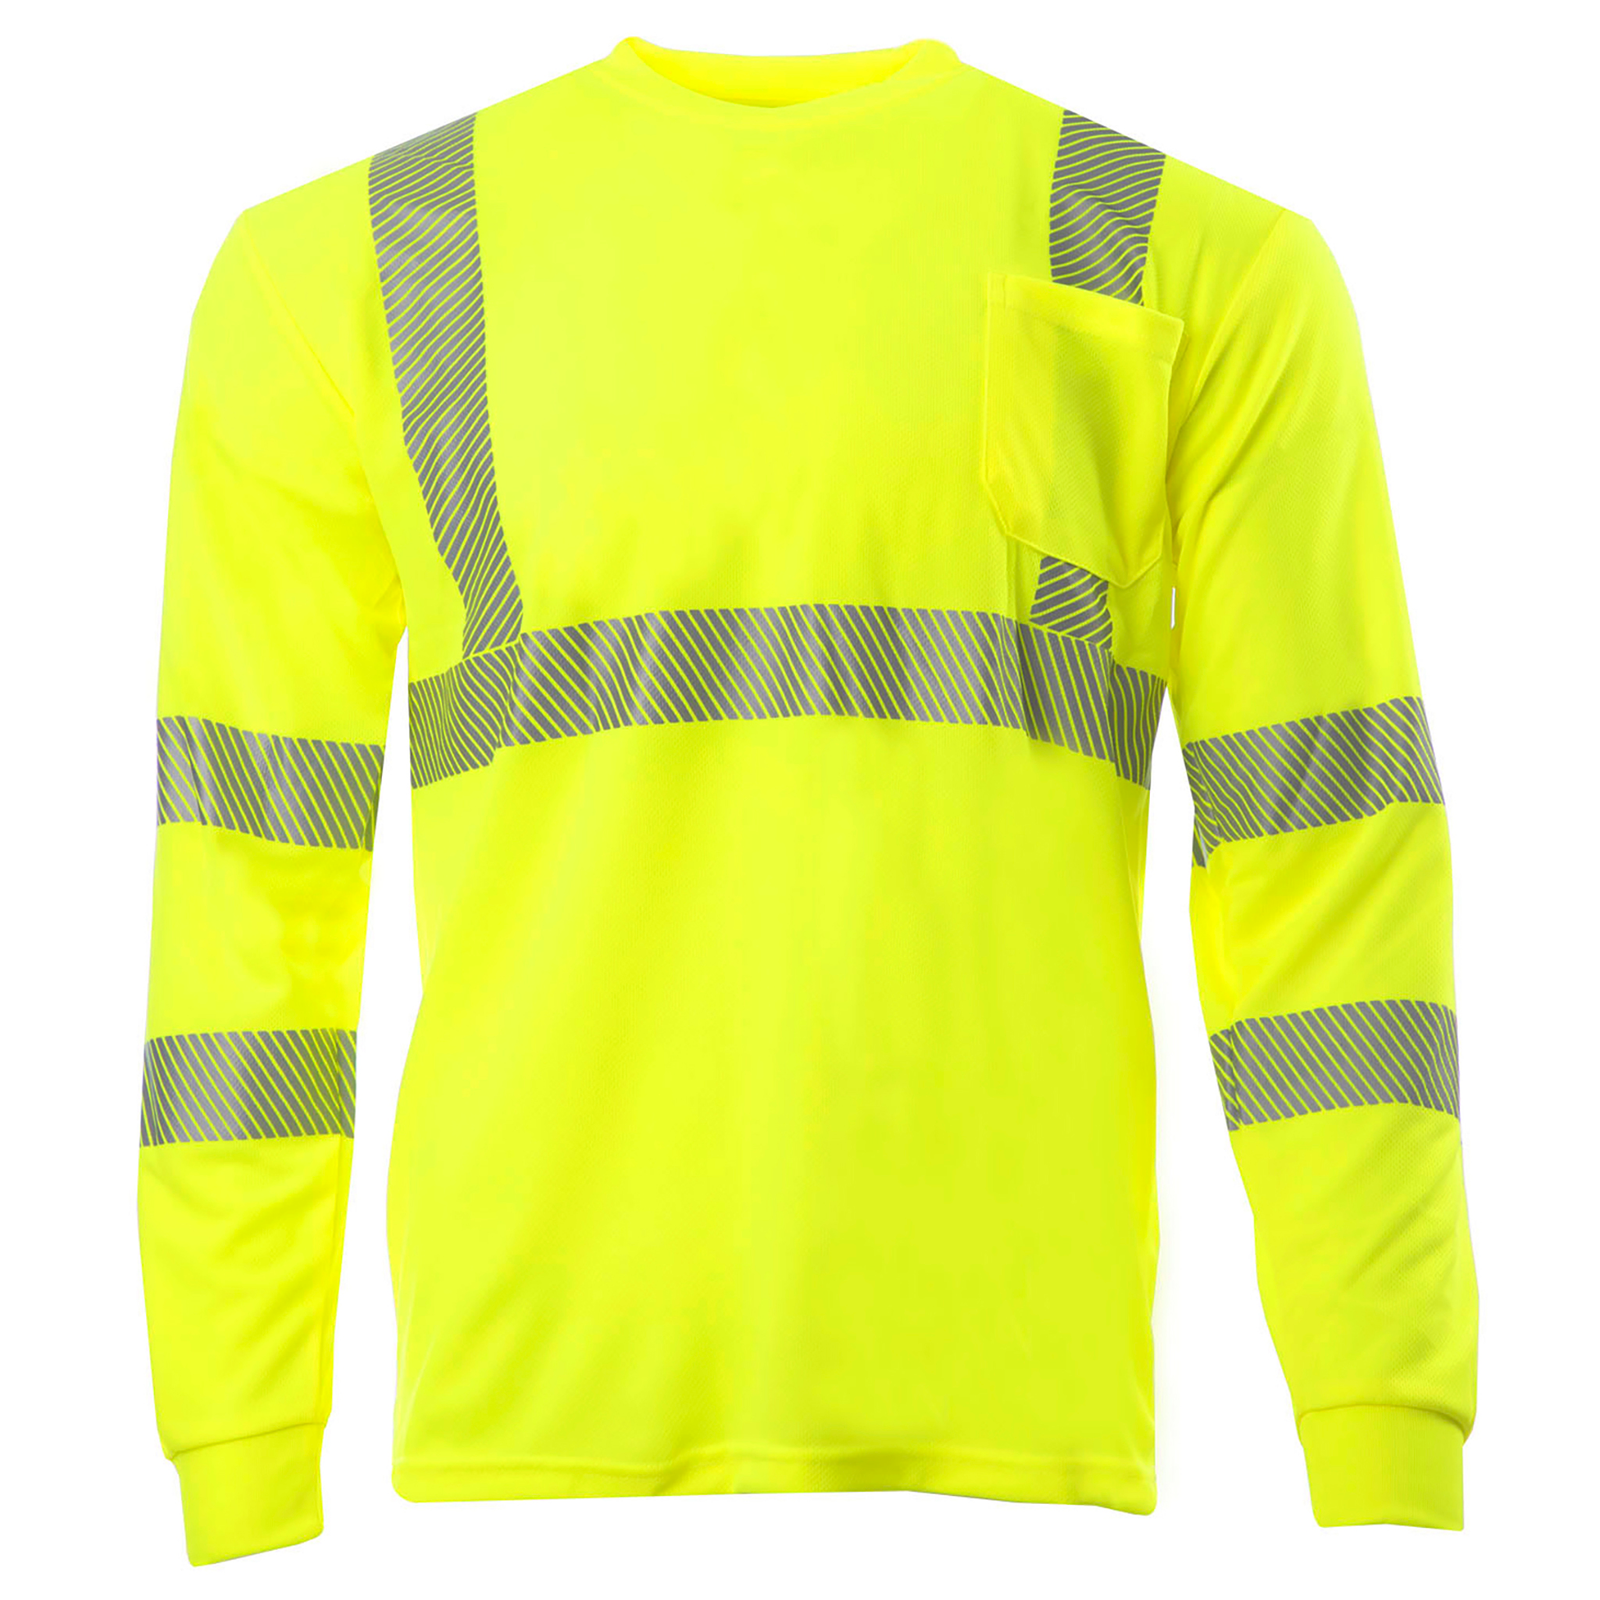 Hi-Vis yellow/lime heat transfer reflective long sleeve safety pocket shirt class 3 type R